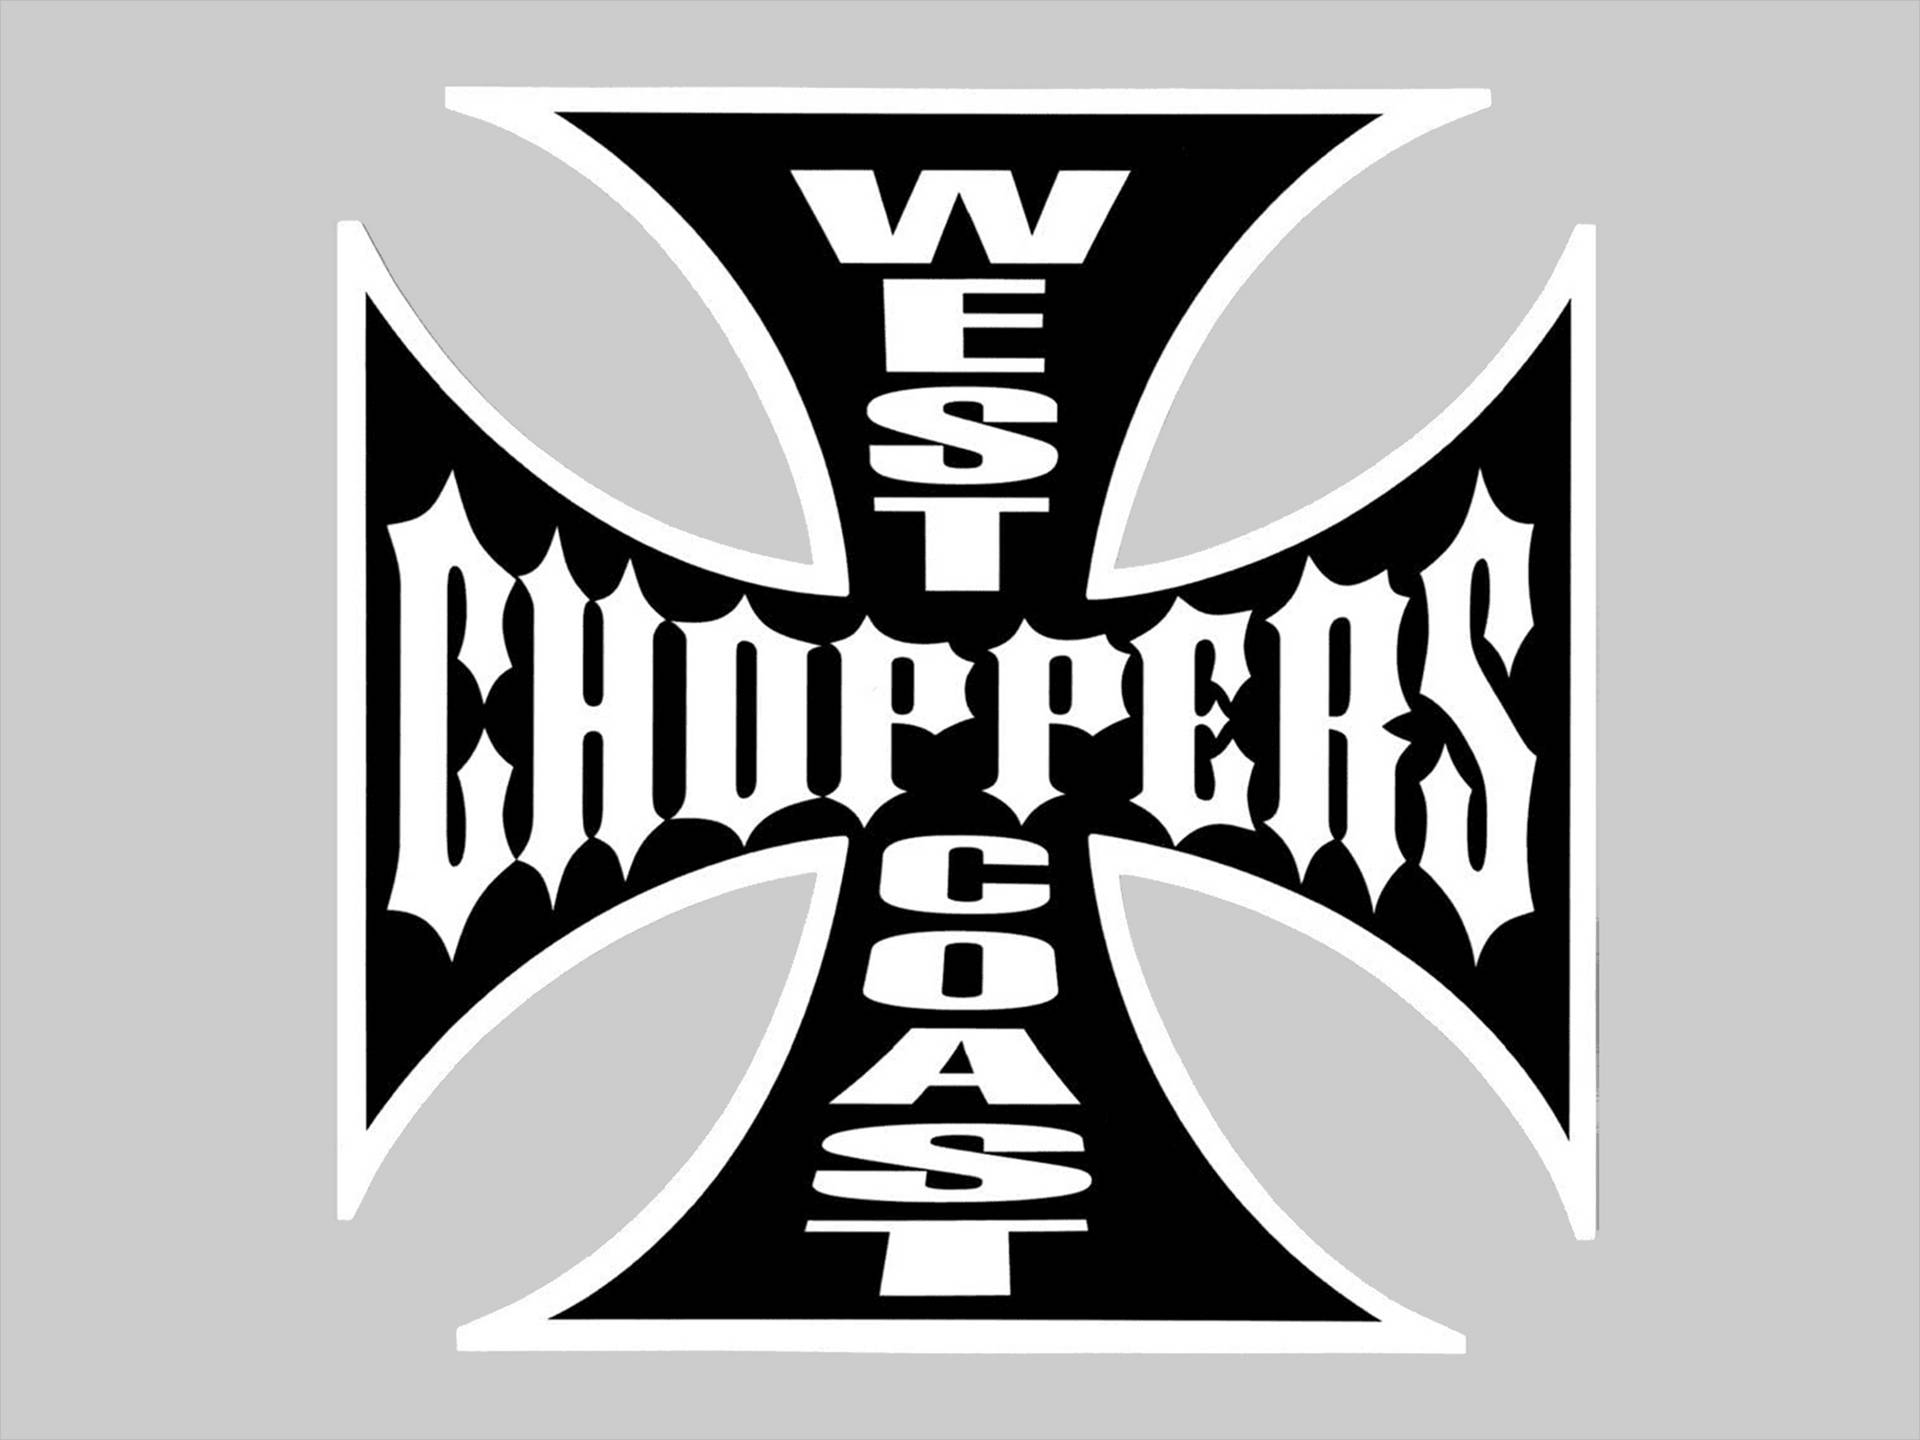 Black West Coast Choppers Symbol Wallpaper